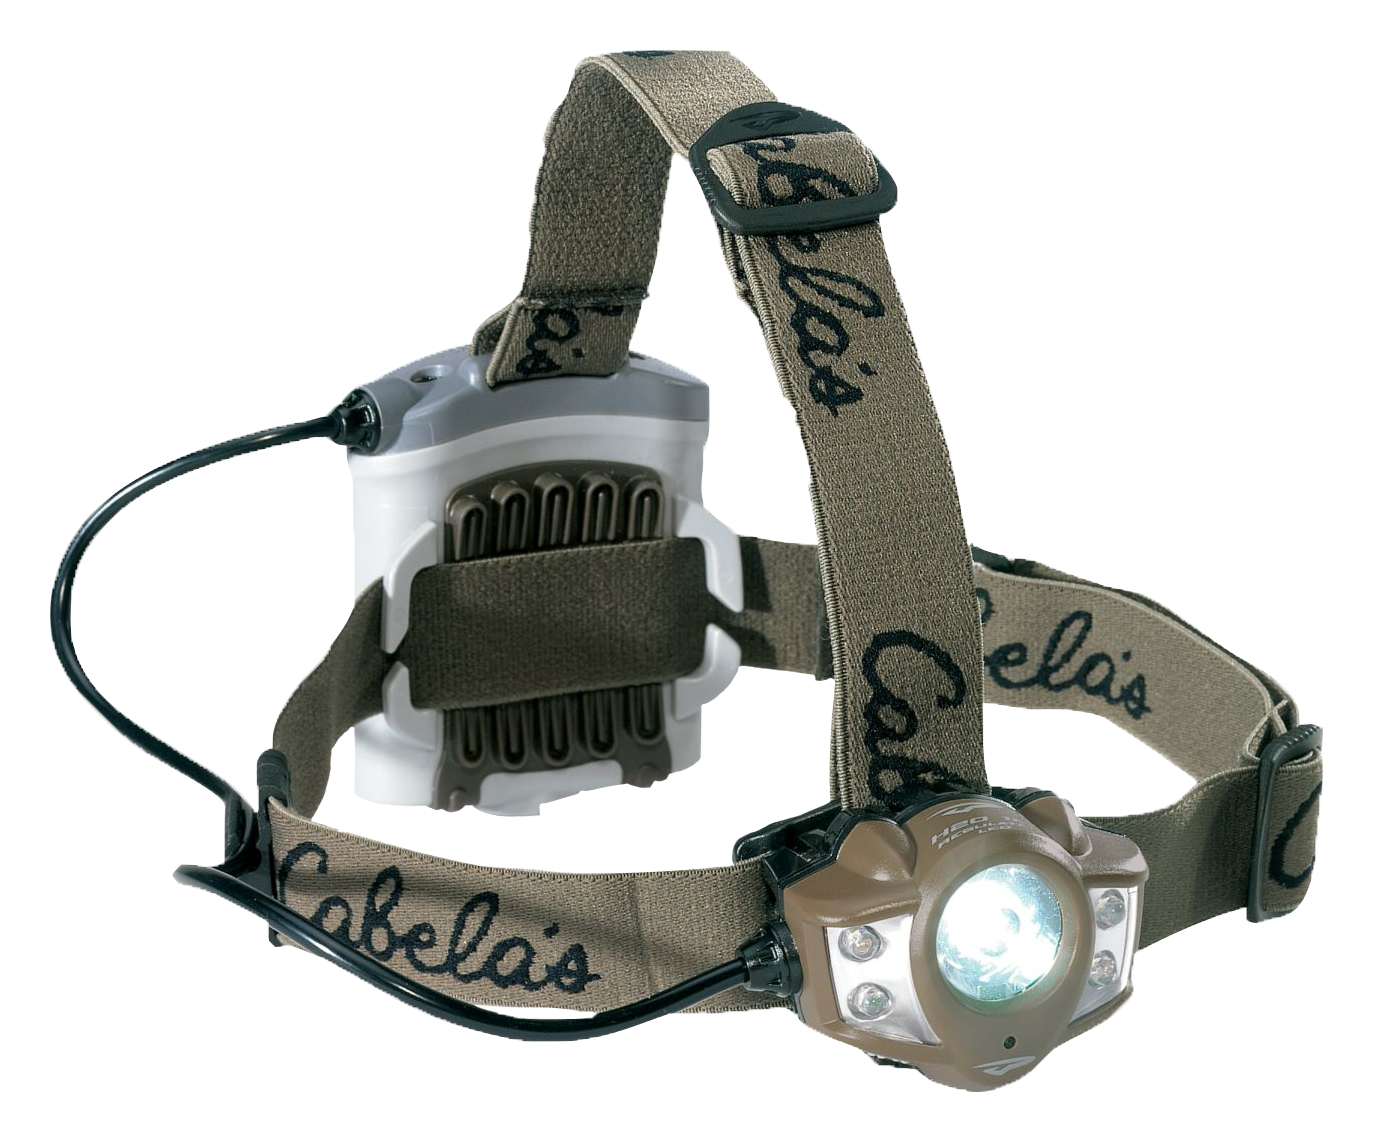 Cabela s by Princeton Tec Alaskan Guide XP Green Headlamp